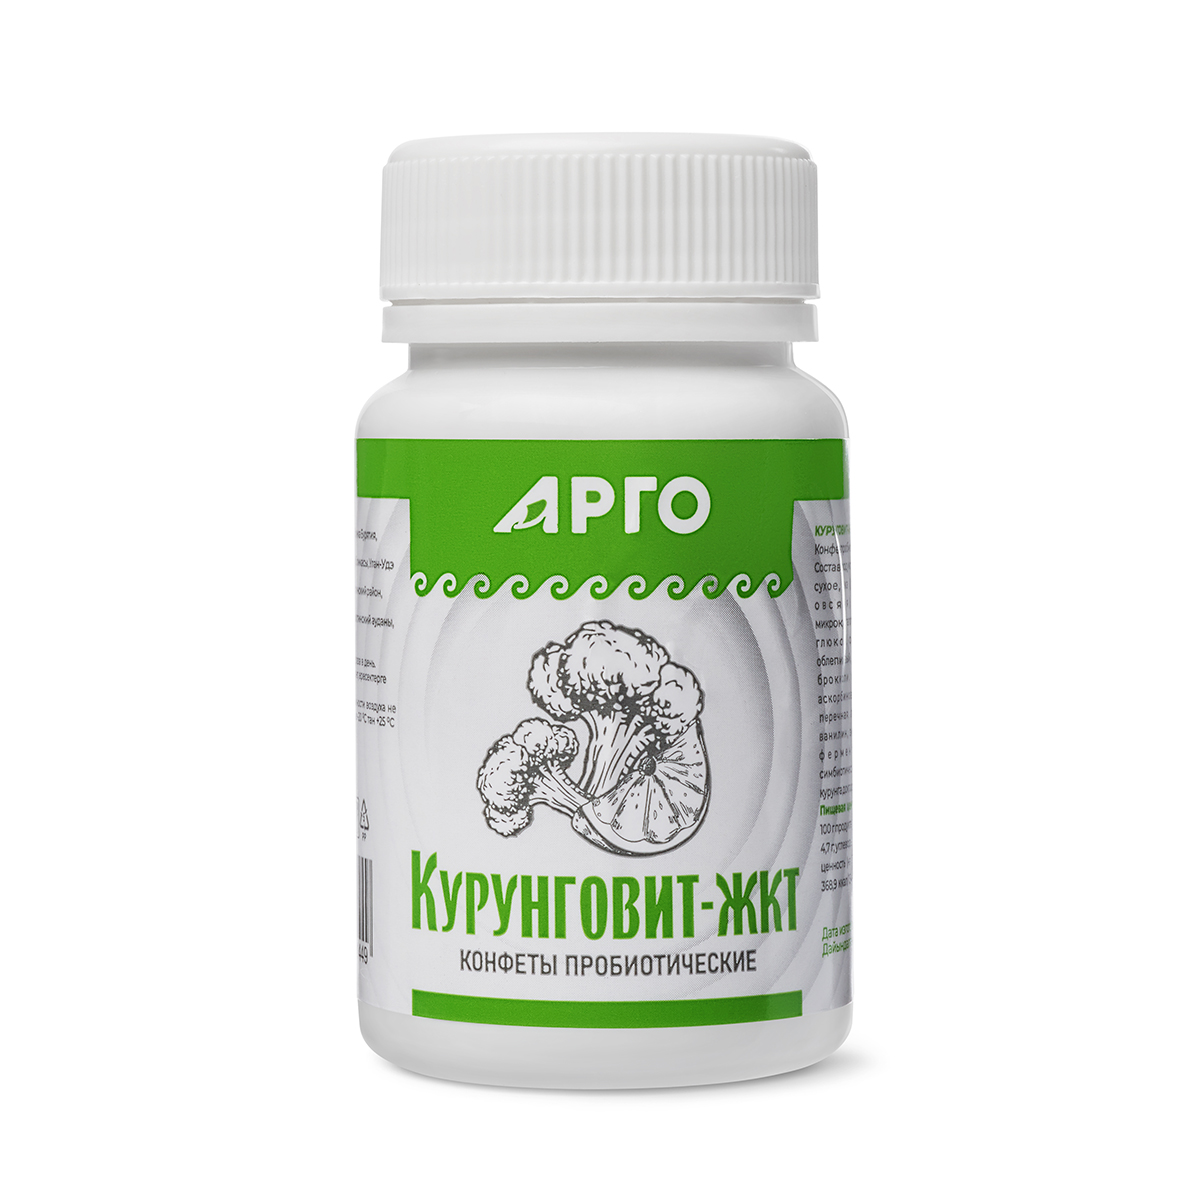 Курунговит-ЖКТ - конфеты пробиотические, 60 шт